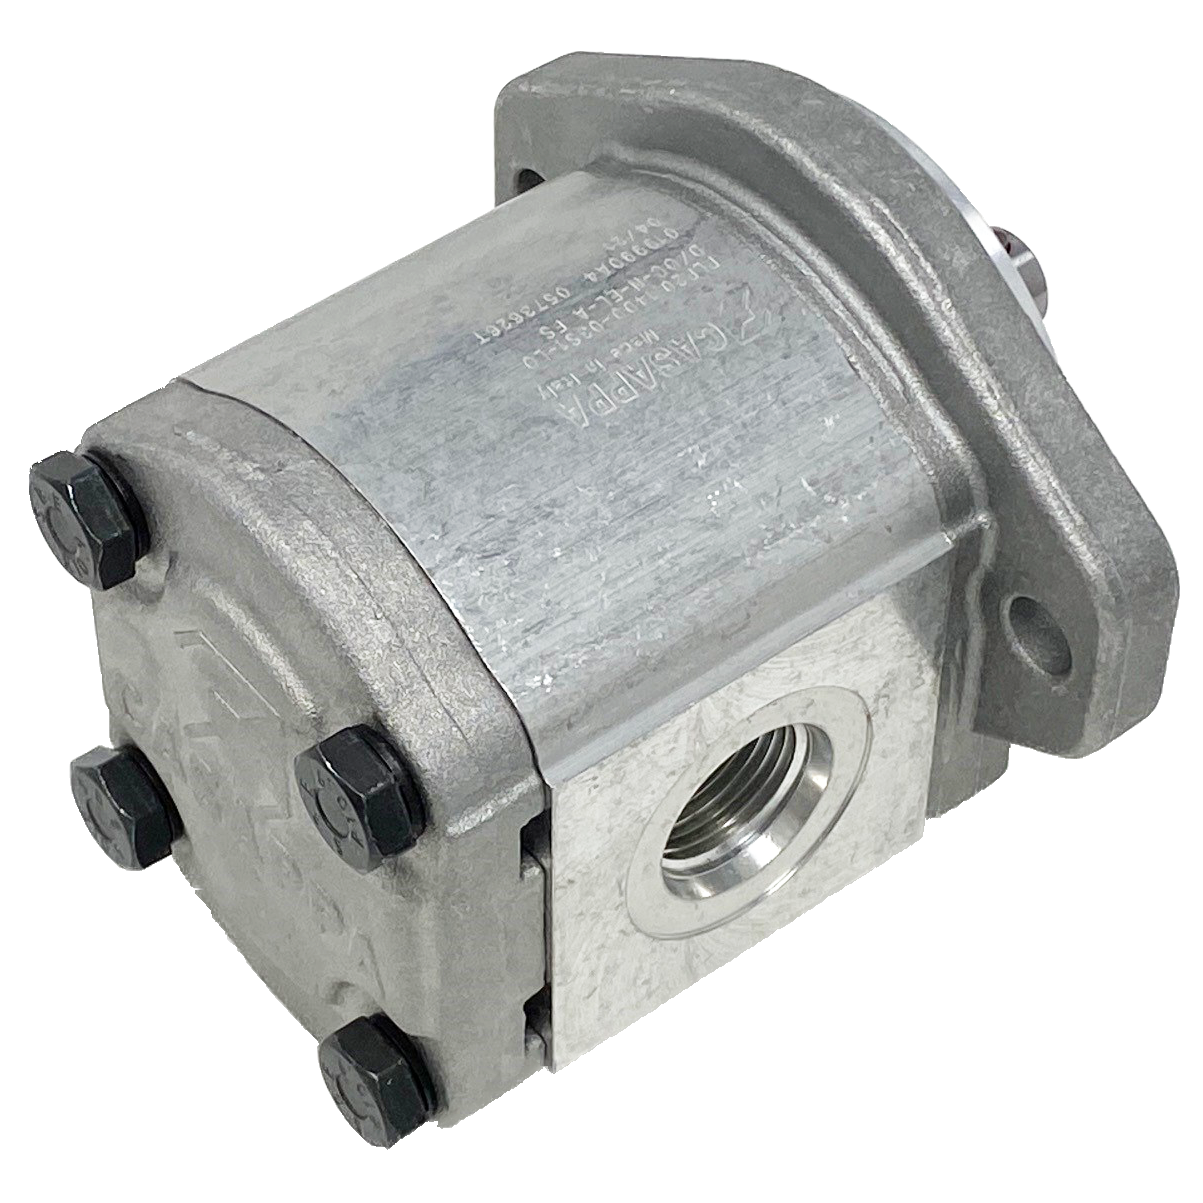 PLM20.16B0-31S1-LOC/OD-N-EL : Casappa Polaris Gear Motor, 16.85cc, 3625psi Rated, 3000RPM, Reversible Interior Drain, 5/8" Bore x 5/32" Key Shaft, SAE A 2-Bolt Flange, 0.625 (5/8") #10 SAE Inlet, 0.75 (3/4") #12 SAE Outlet, Aluminum Body & Flange